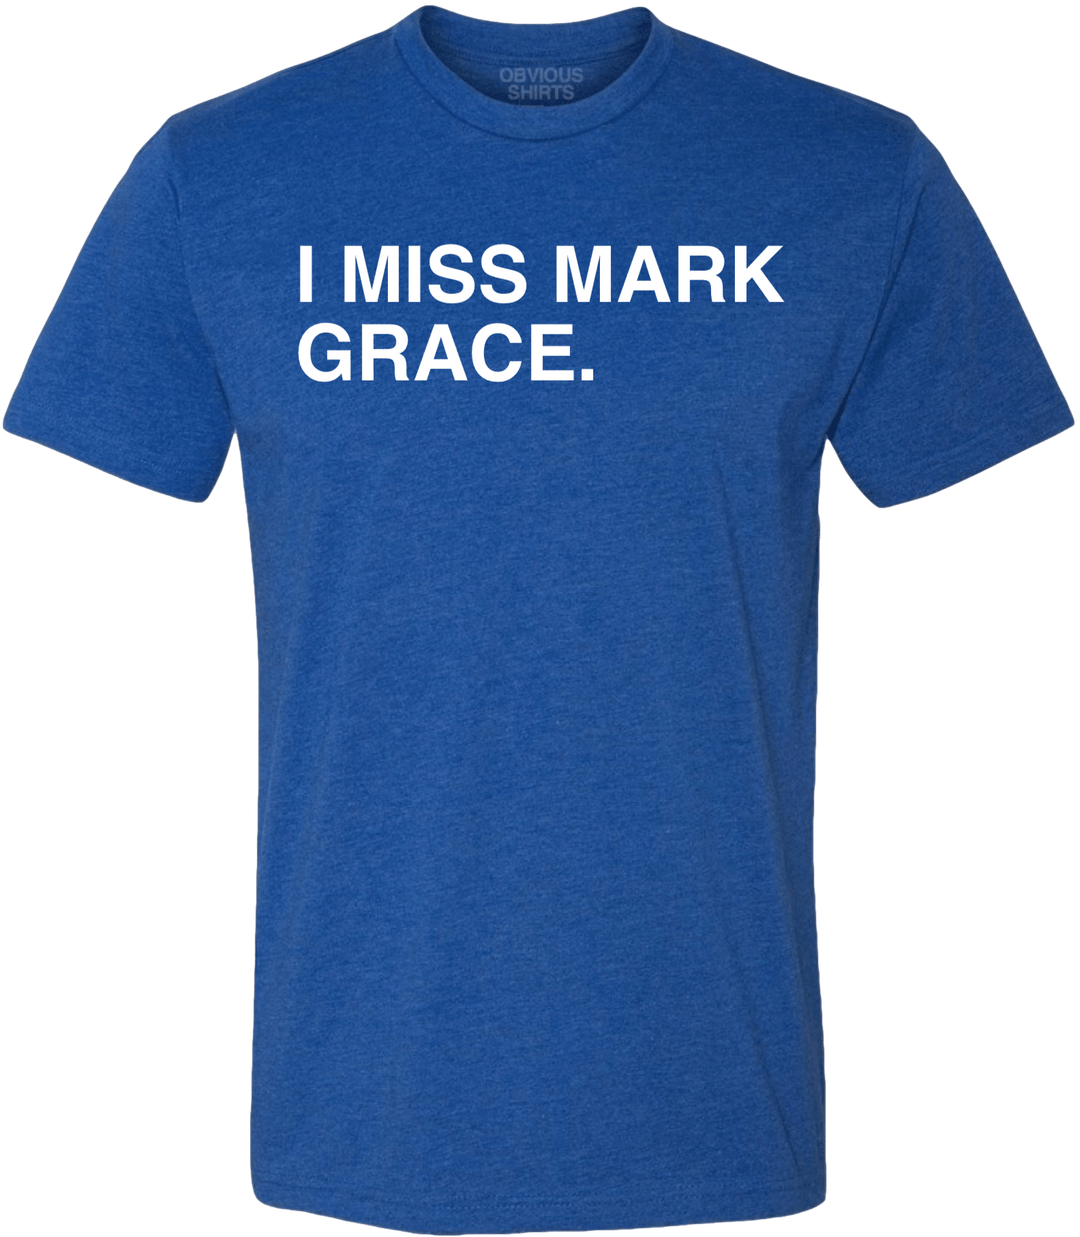 I MISS MARK GRACE. - OBVIOUS SHIRTS